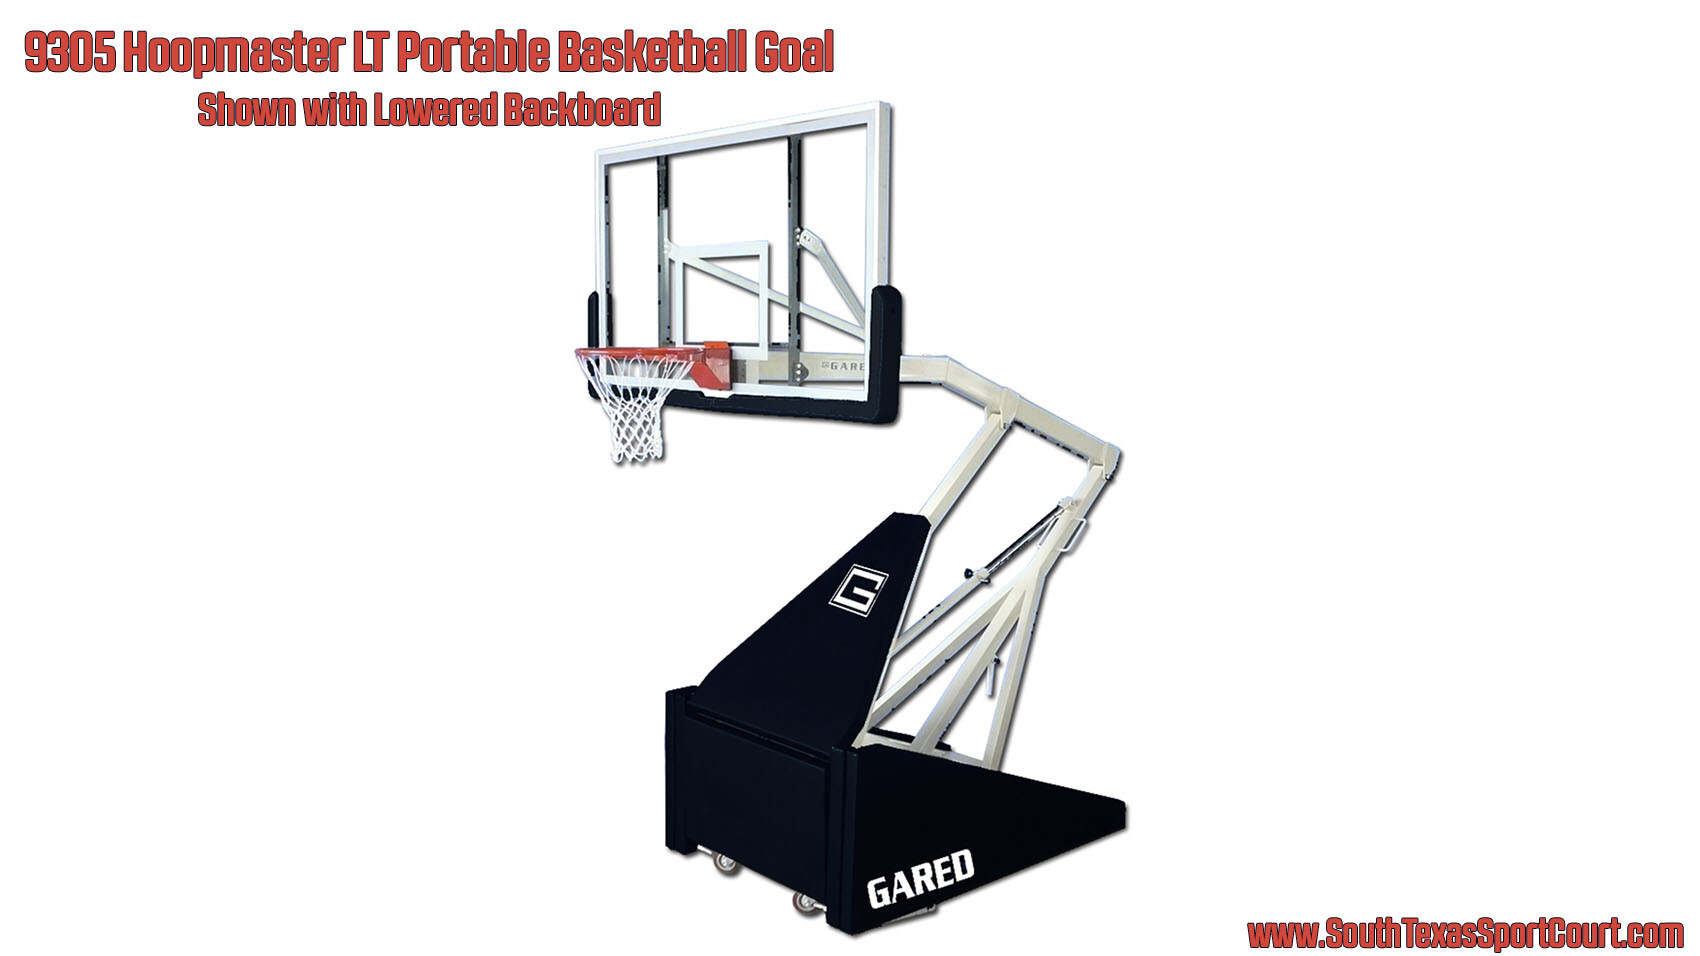 Basketball court line markings - Continental Sports Ltd